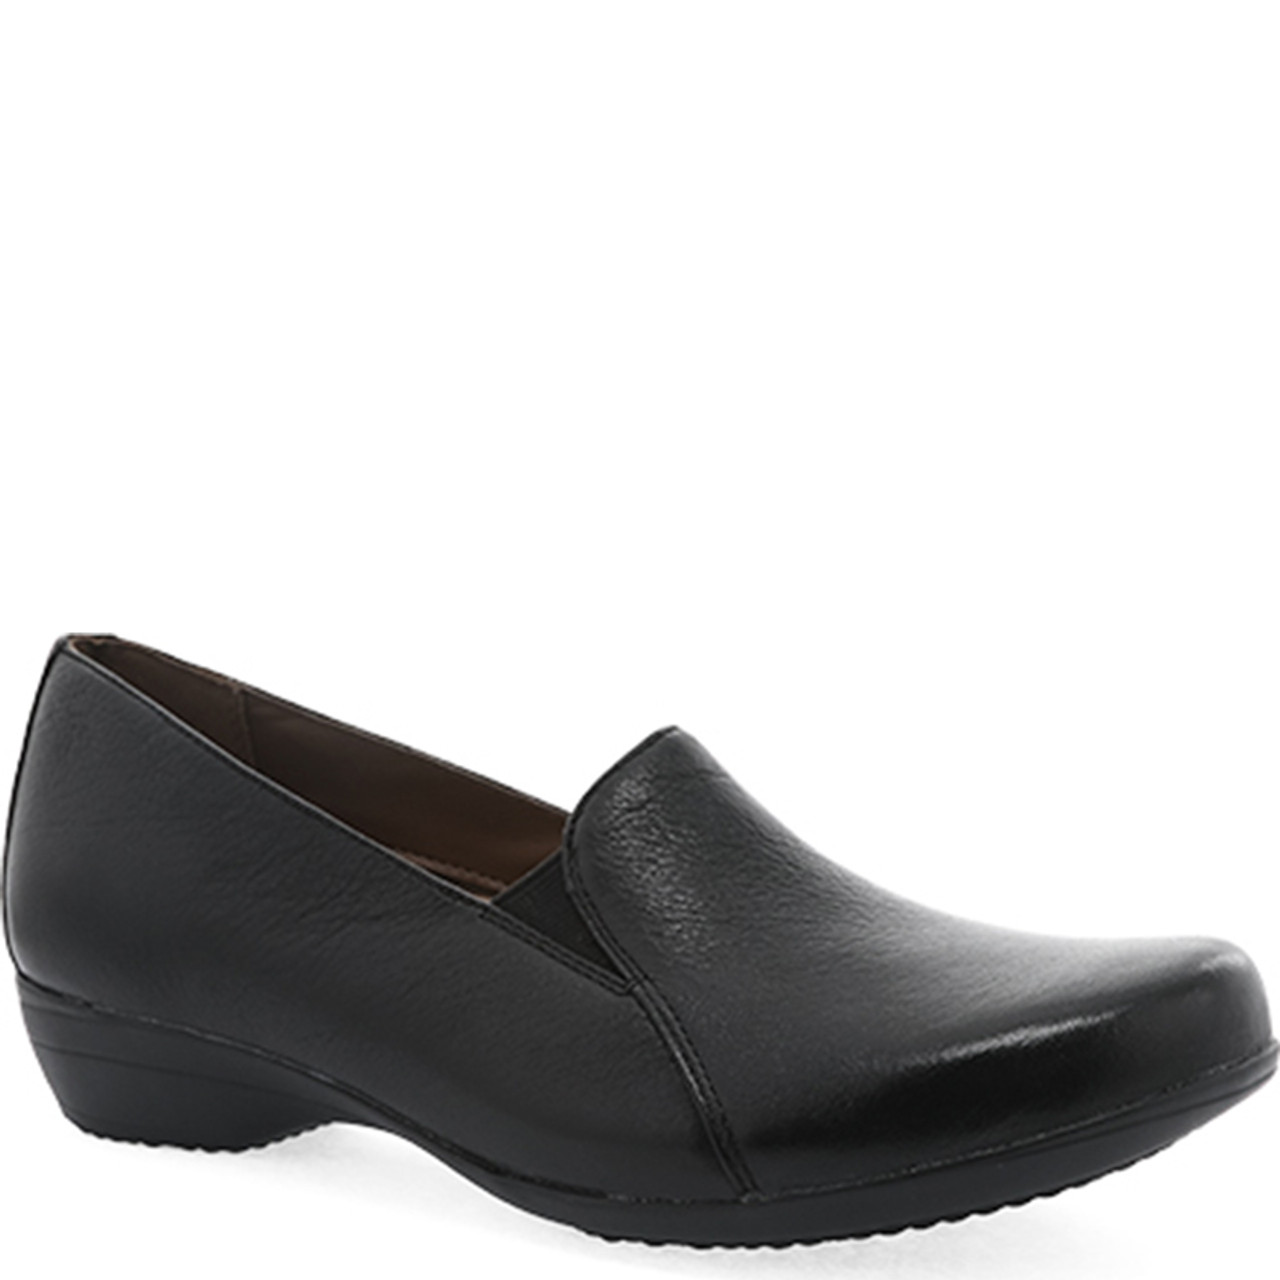 Dansko FRANNY BLACK Milled Nappa Leather Flats - Family Footwear Center